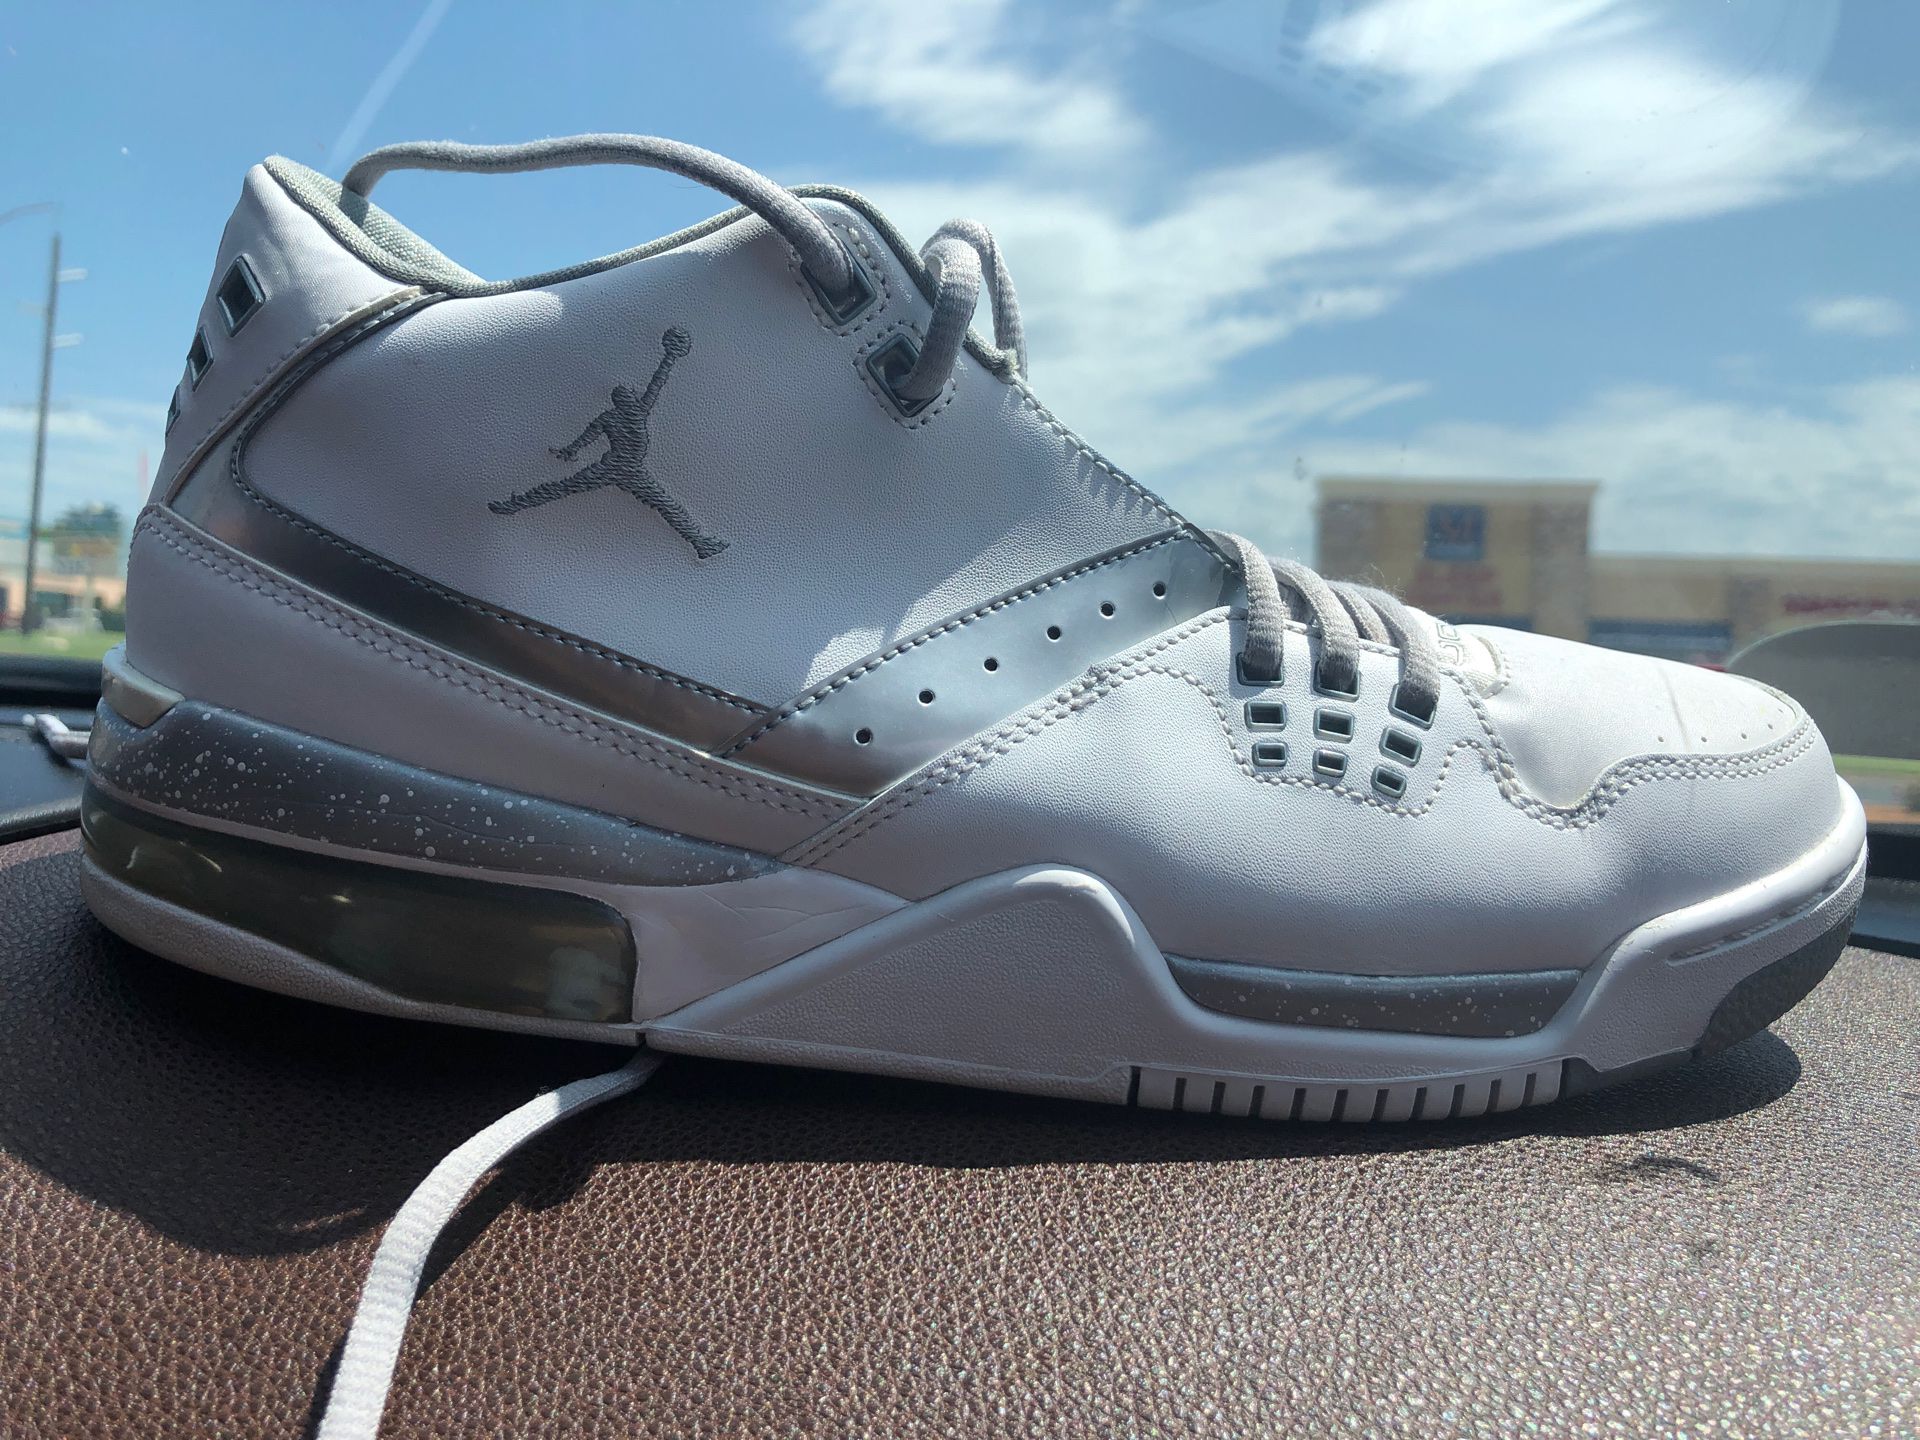 Men’s Jordan shoes